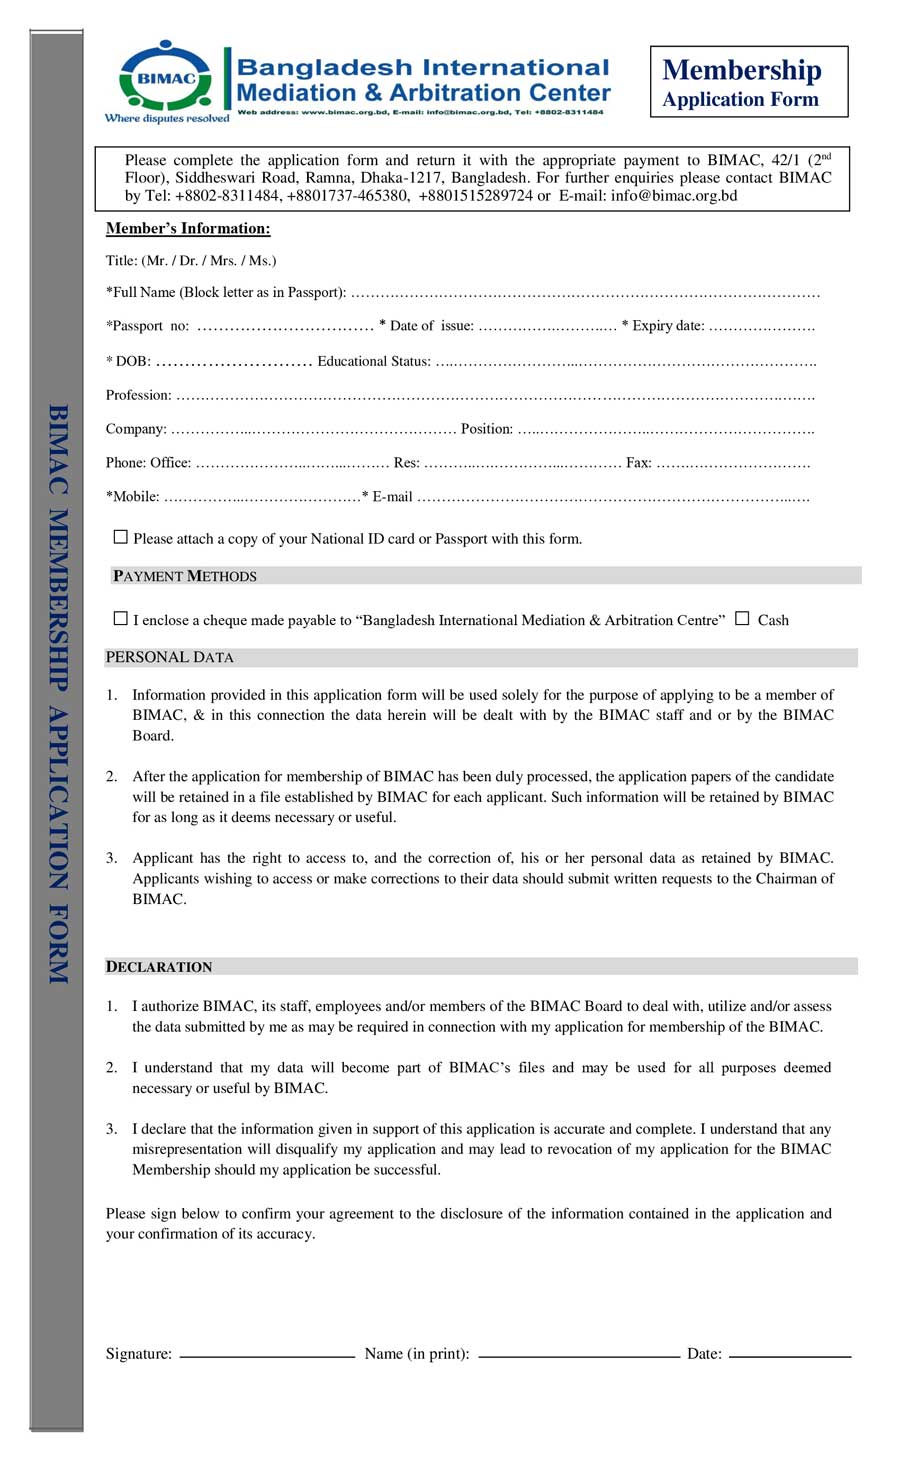 Membership Form